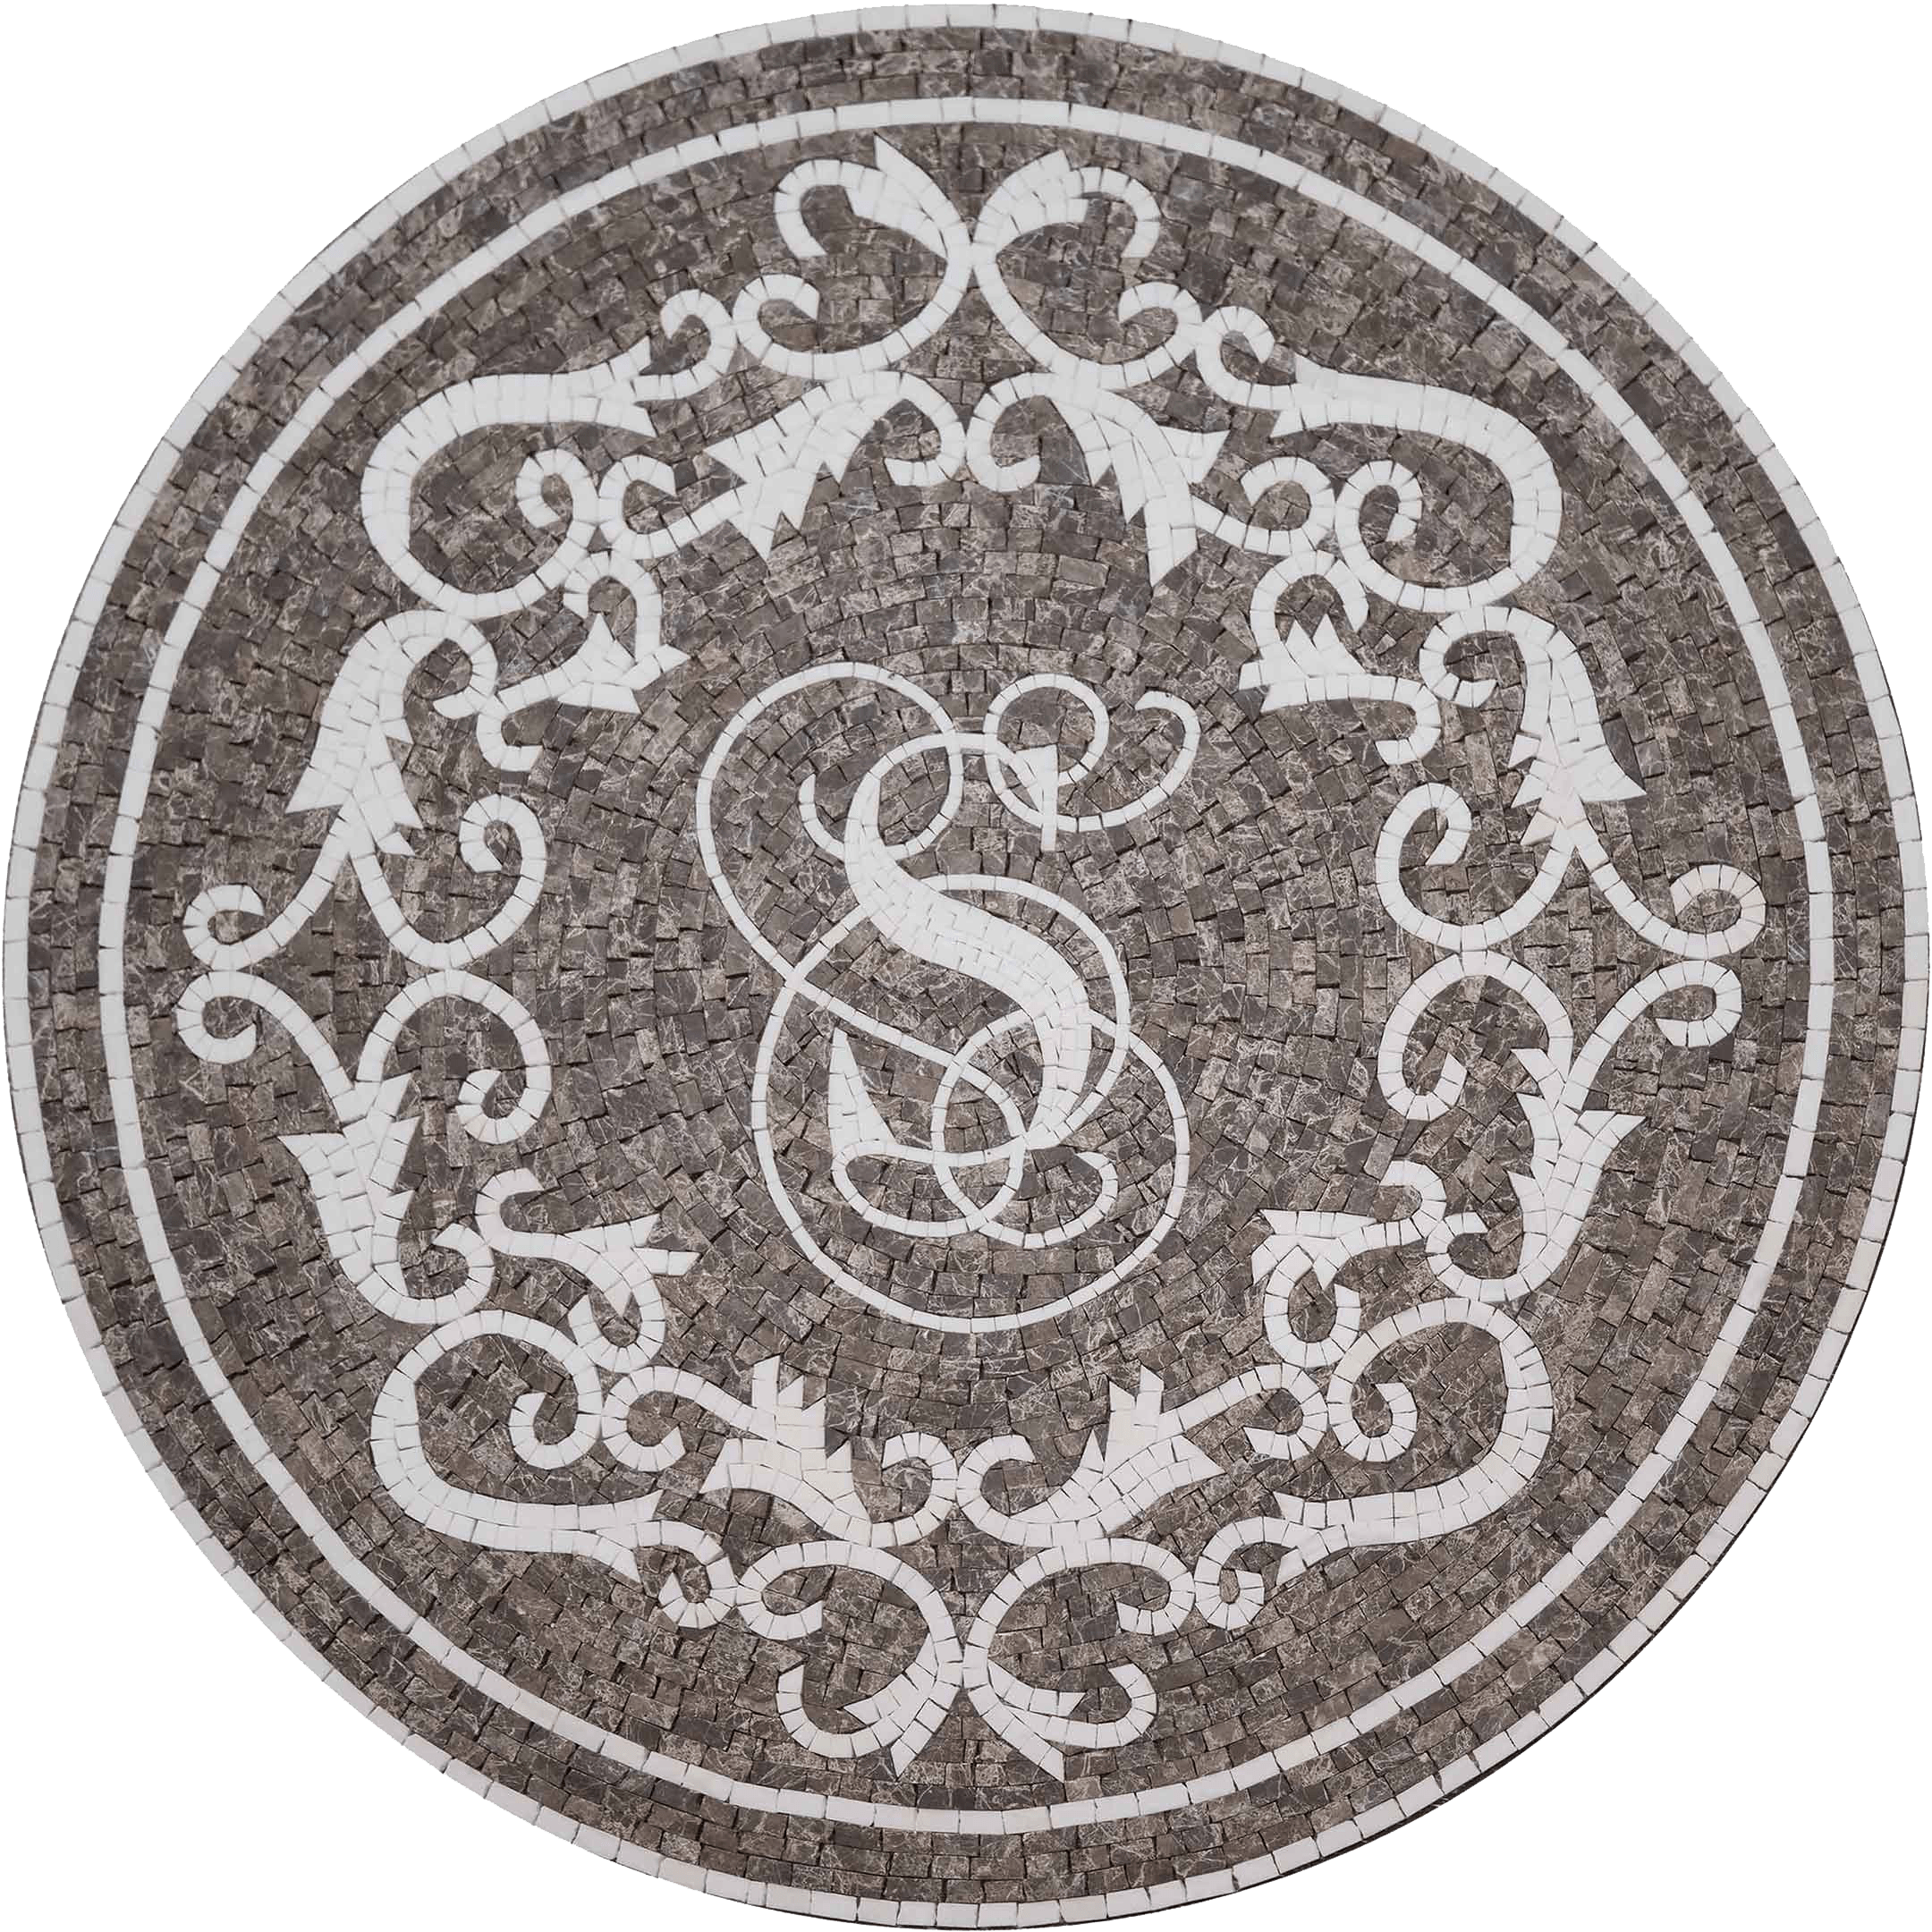 Custom Mosaic Tile Floor Mat – The Monogram Shop